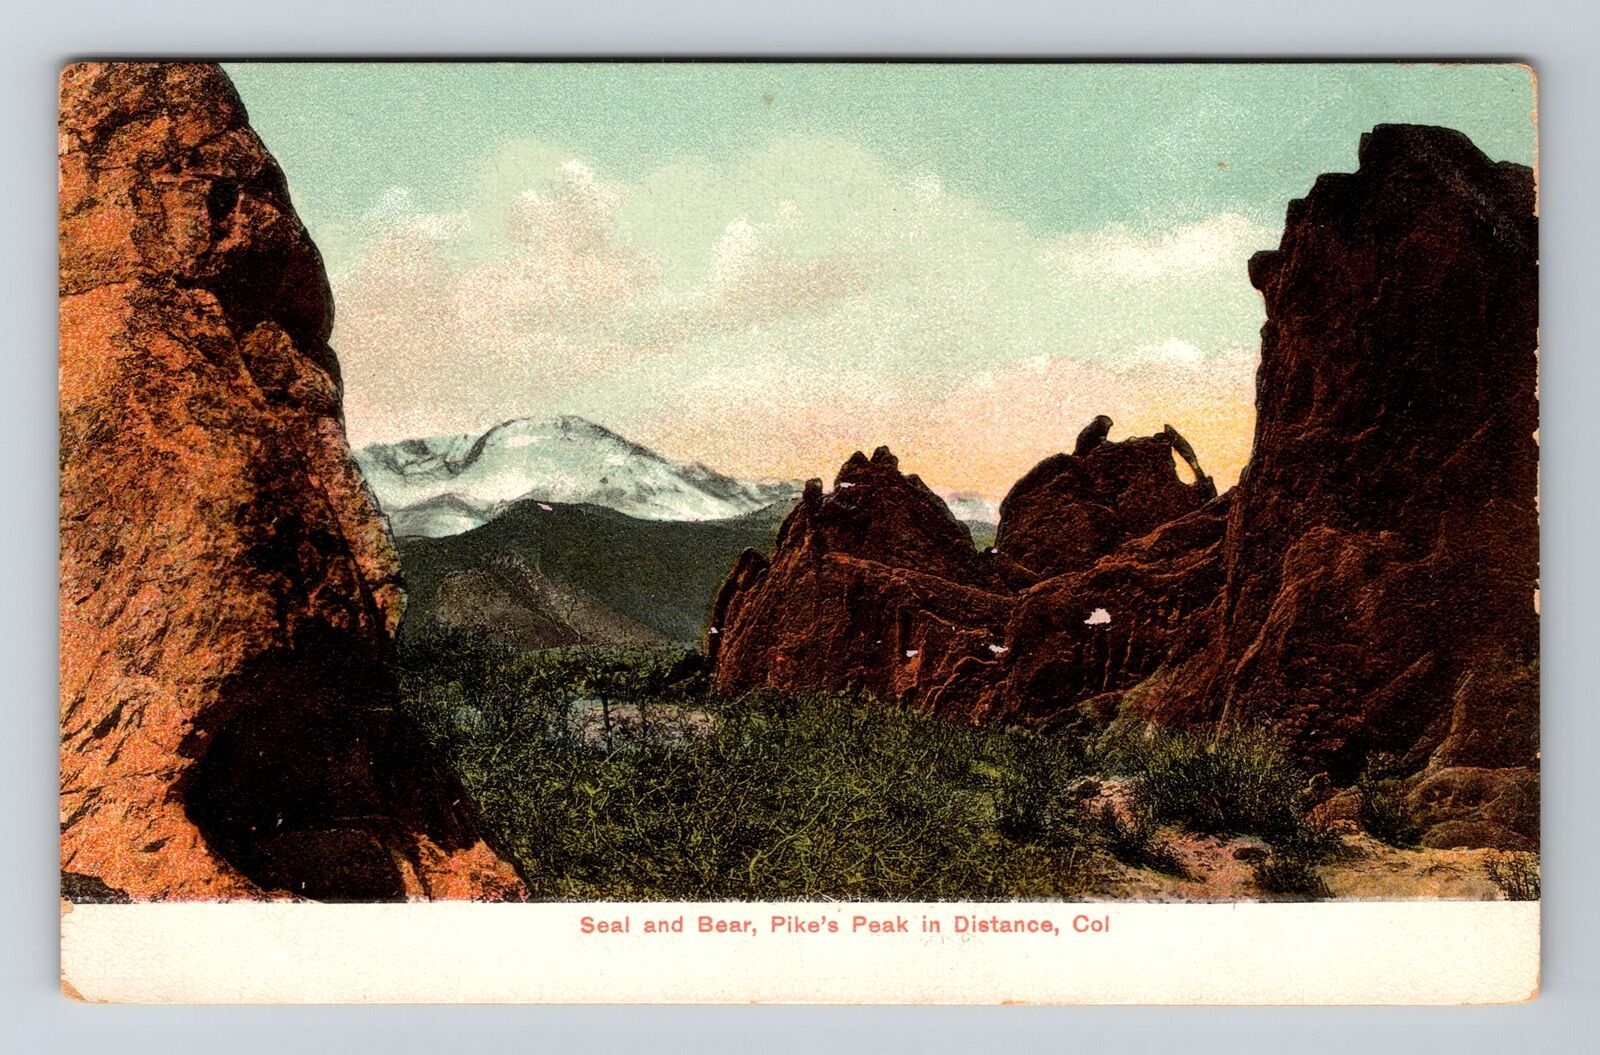 Pike's Peak CO-Colorado, Seal And Bear, Pike's Peak Vintage Souvenir Postcard